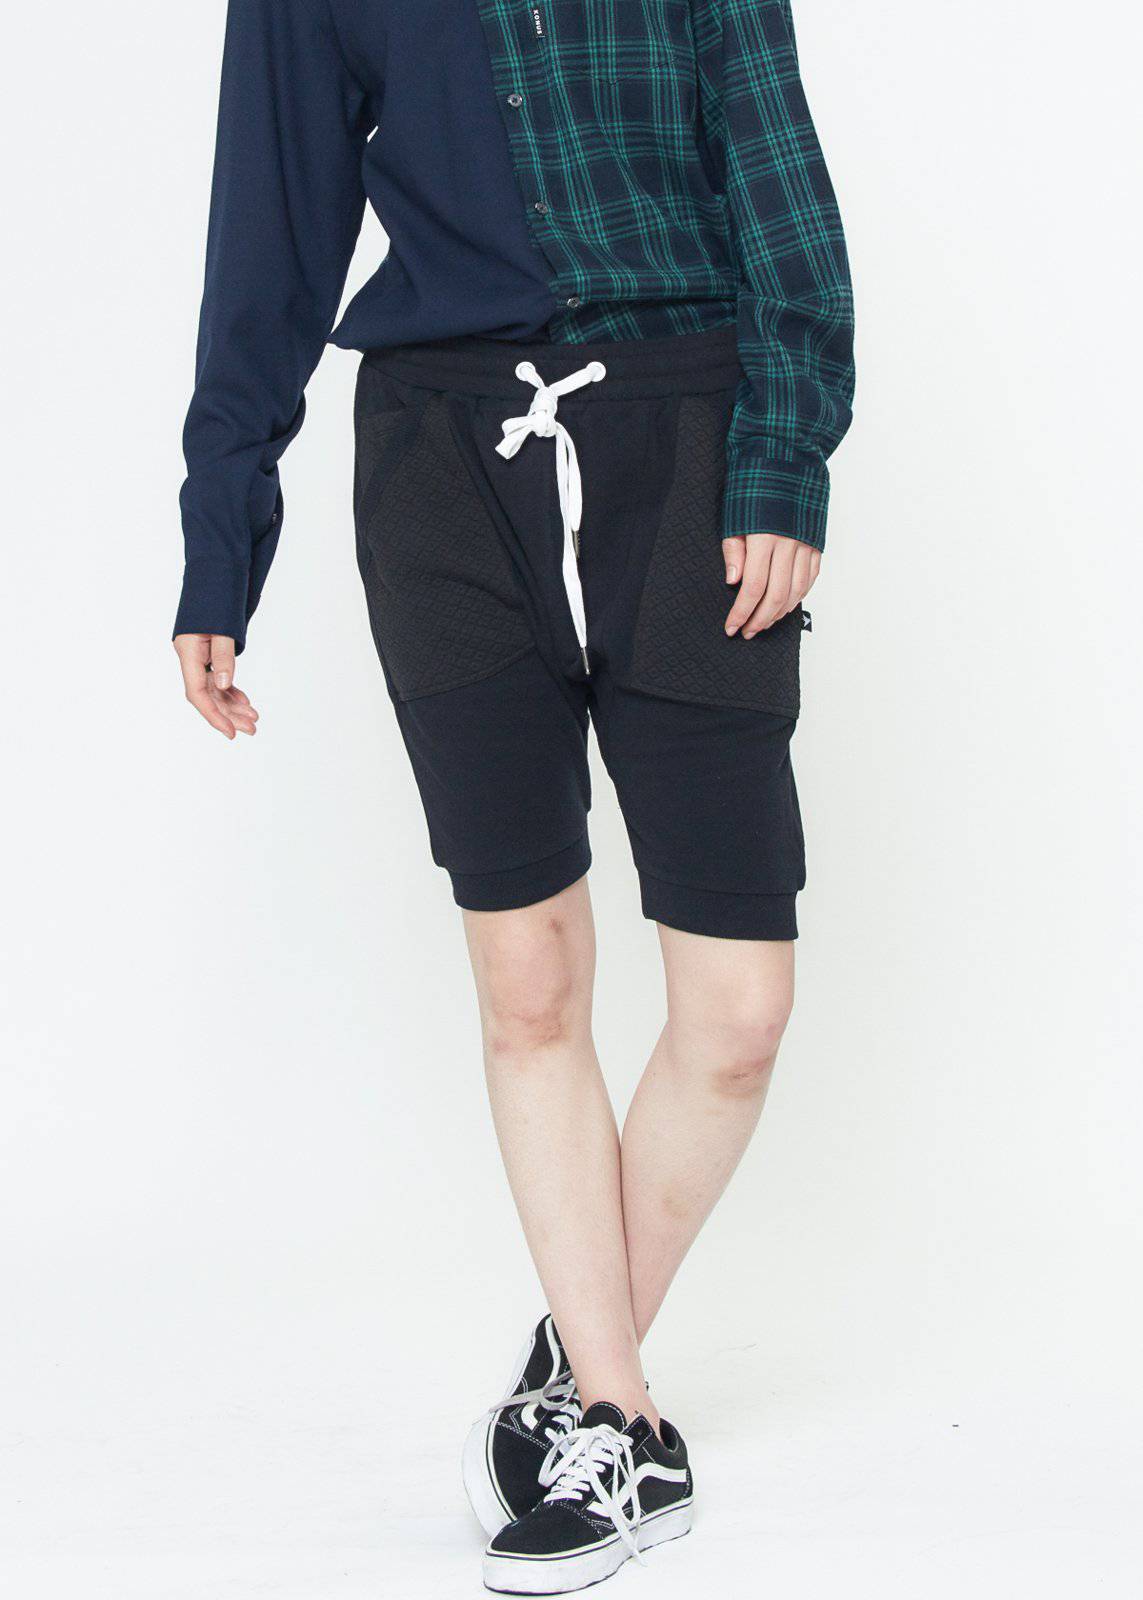 Konus Men's Drop Crotch Shorts Contrast Pockets in Black by Shop at Konus